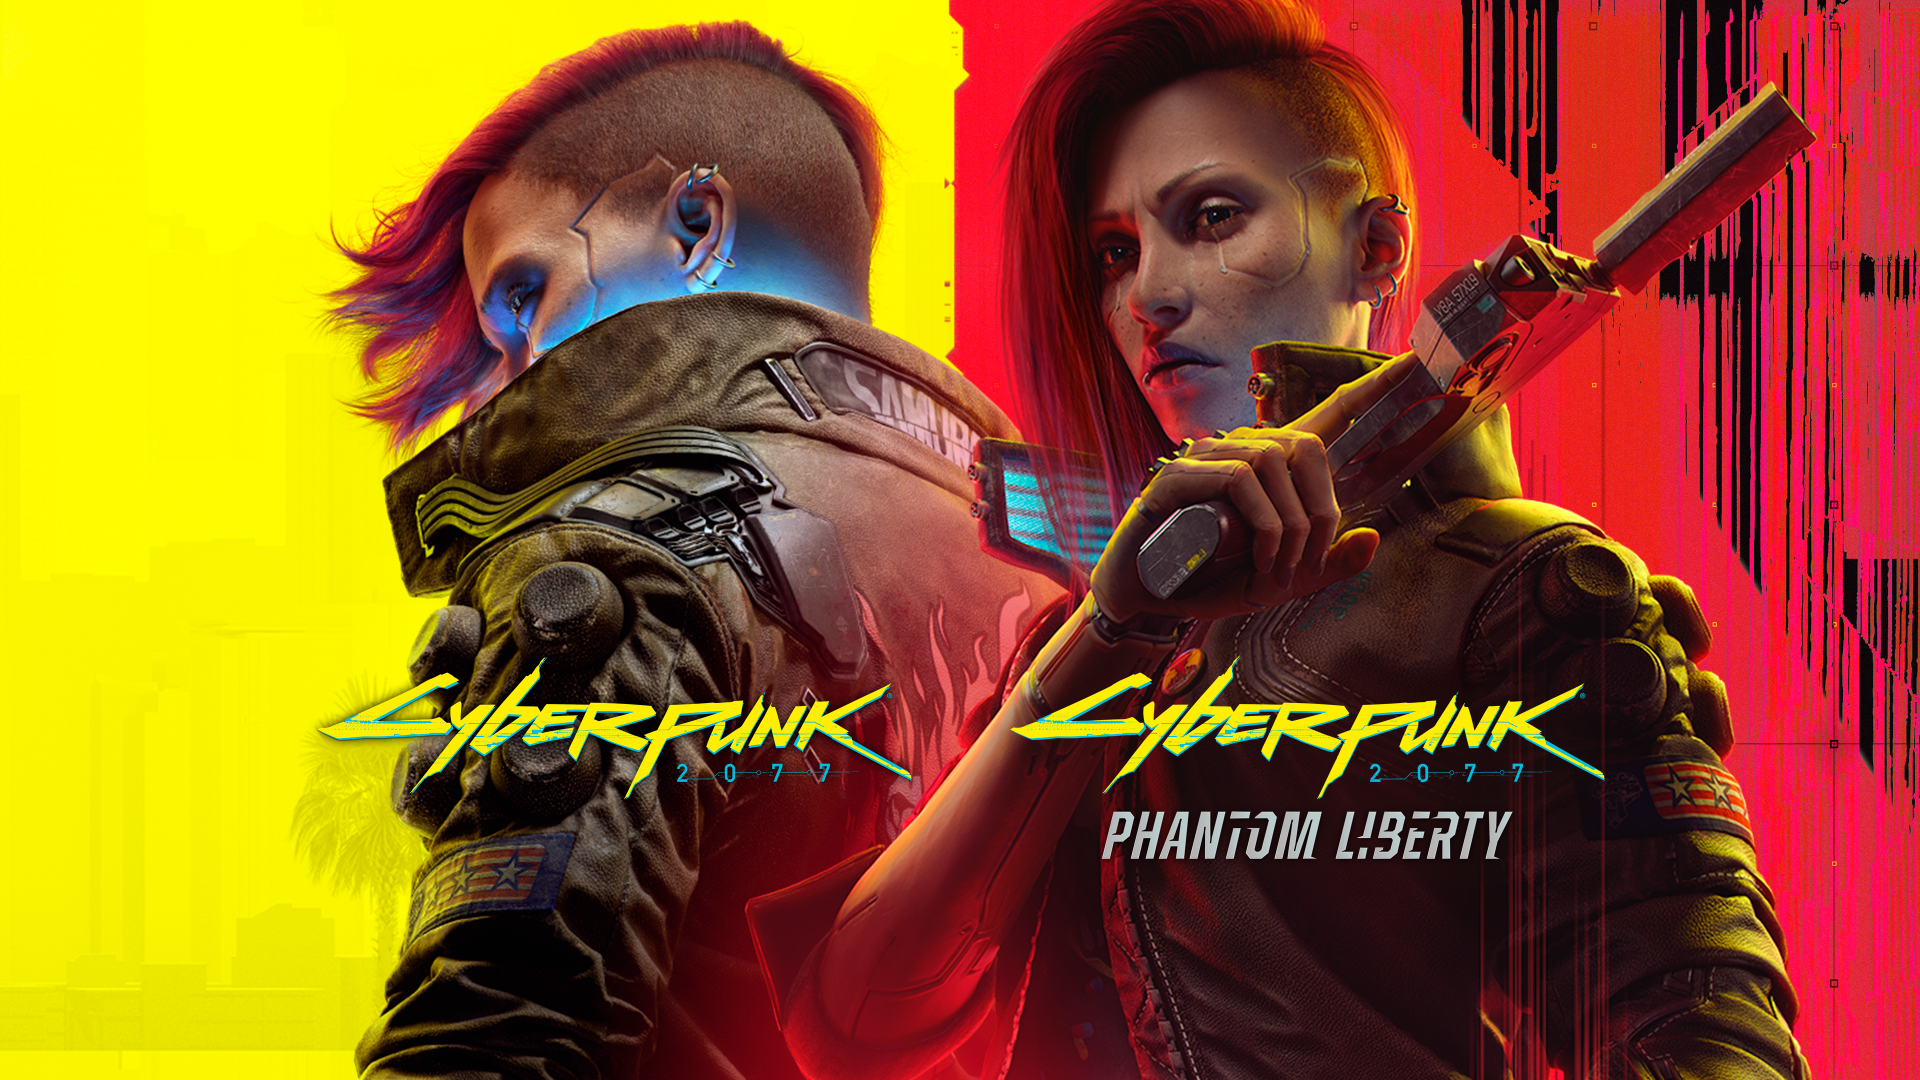 Cyberpunk 2077 Phantom Liberty. [3840x2160] and [1920x1080] : r